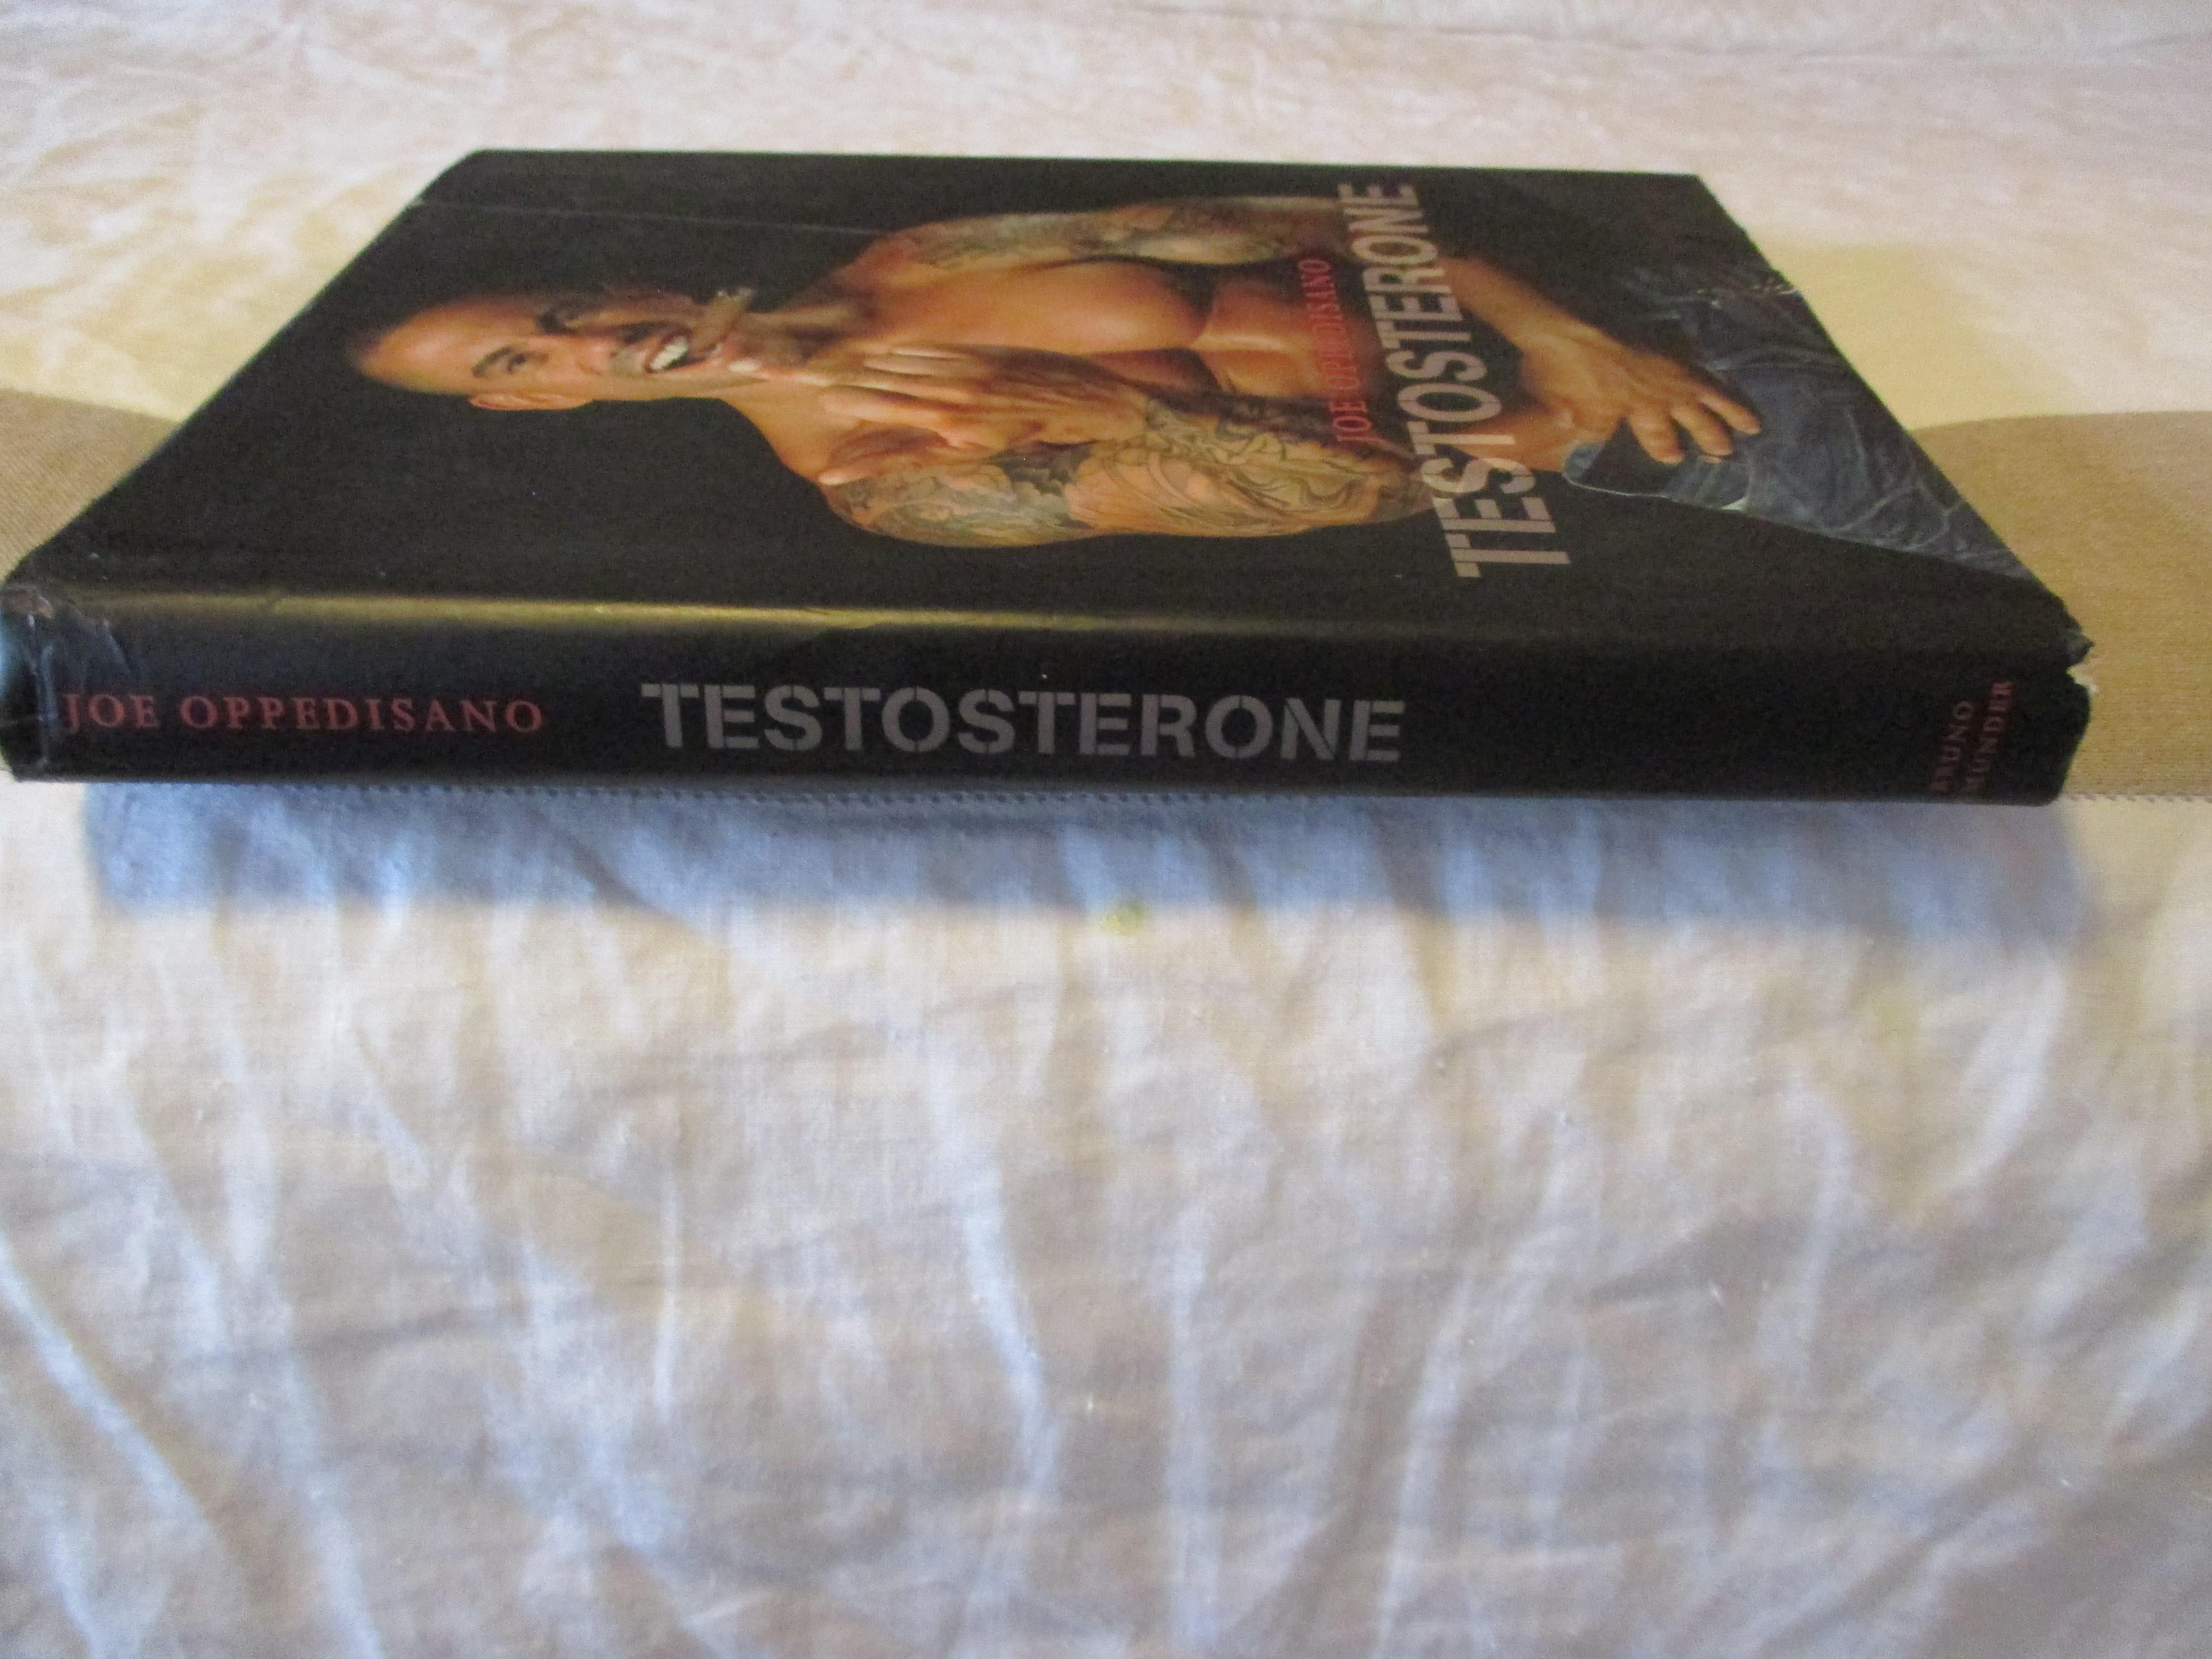 North American Testosterone Vintage Coffee Table Book